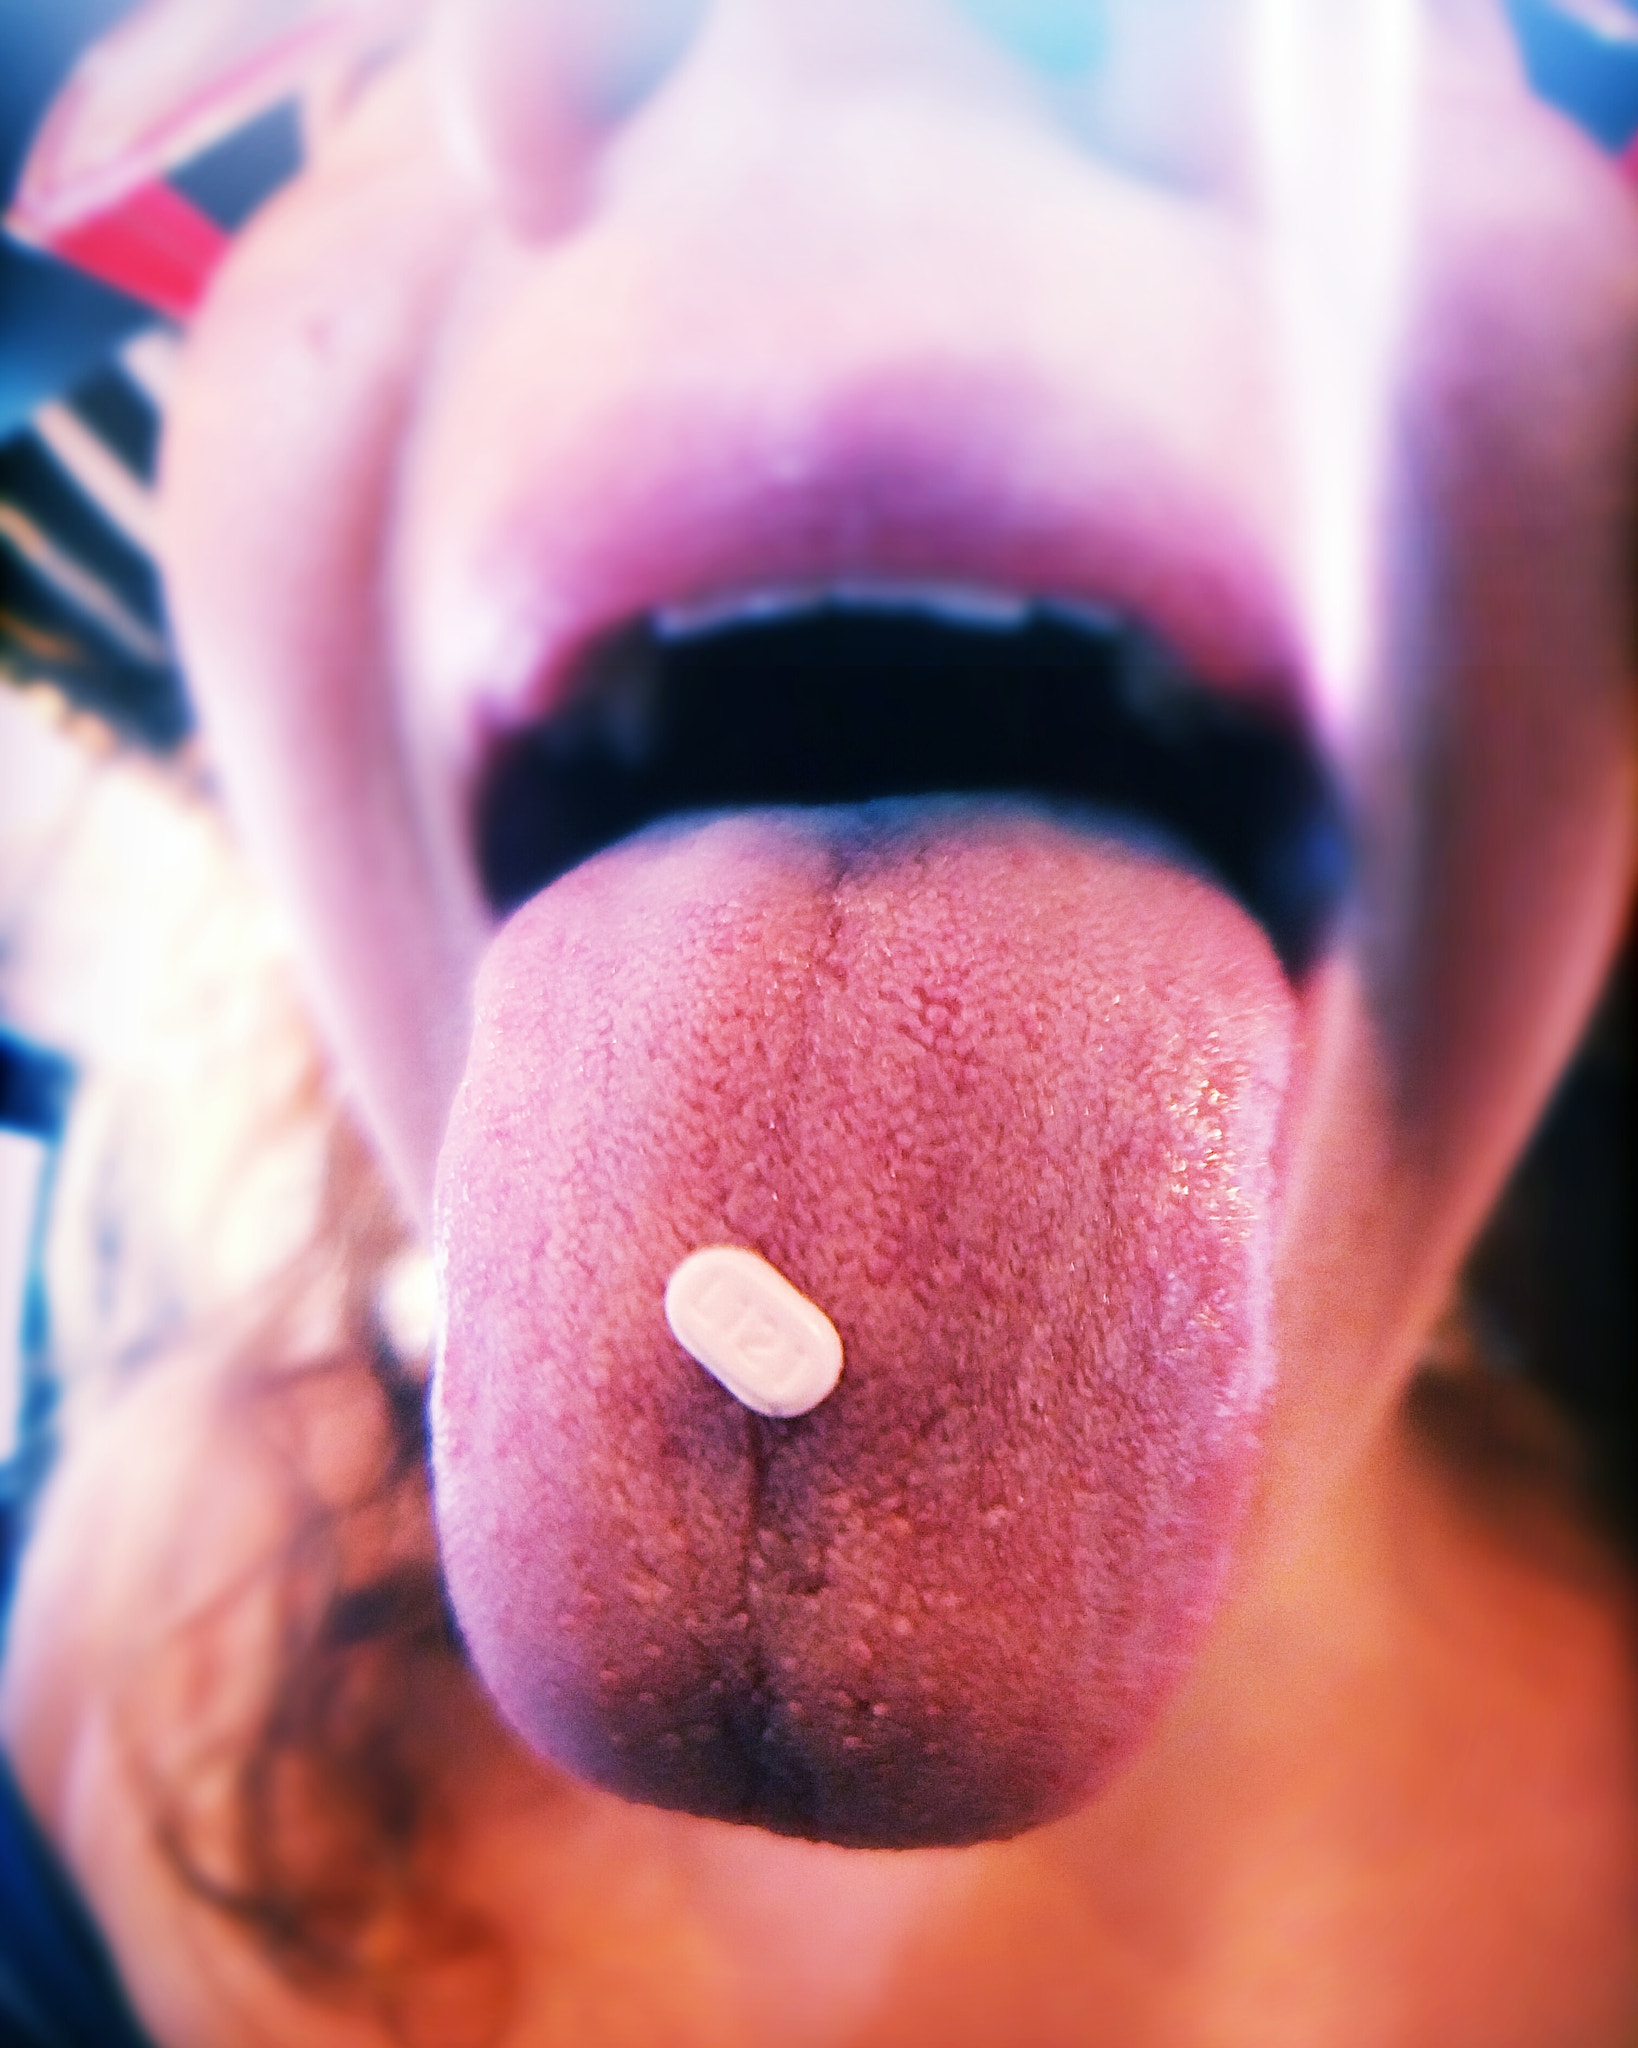 The last pill